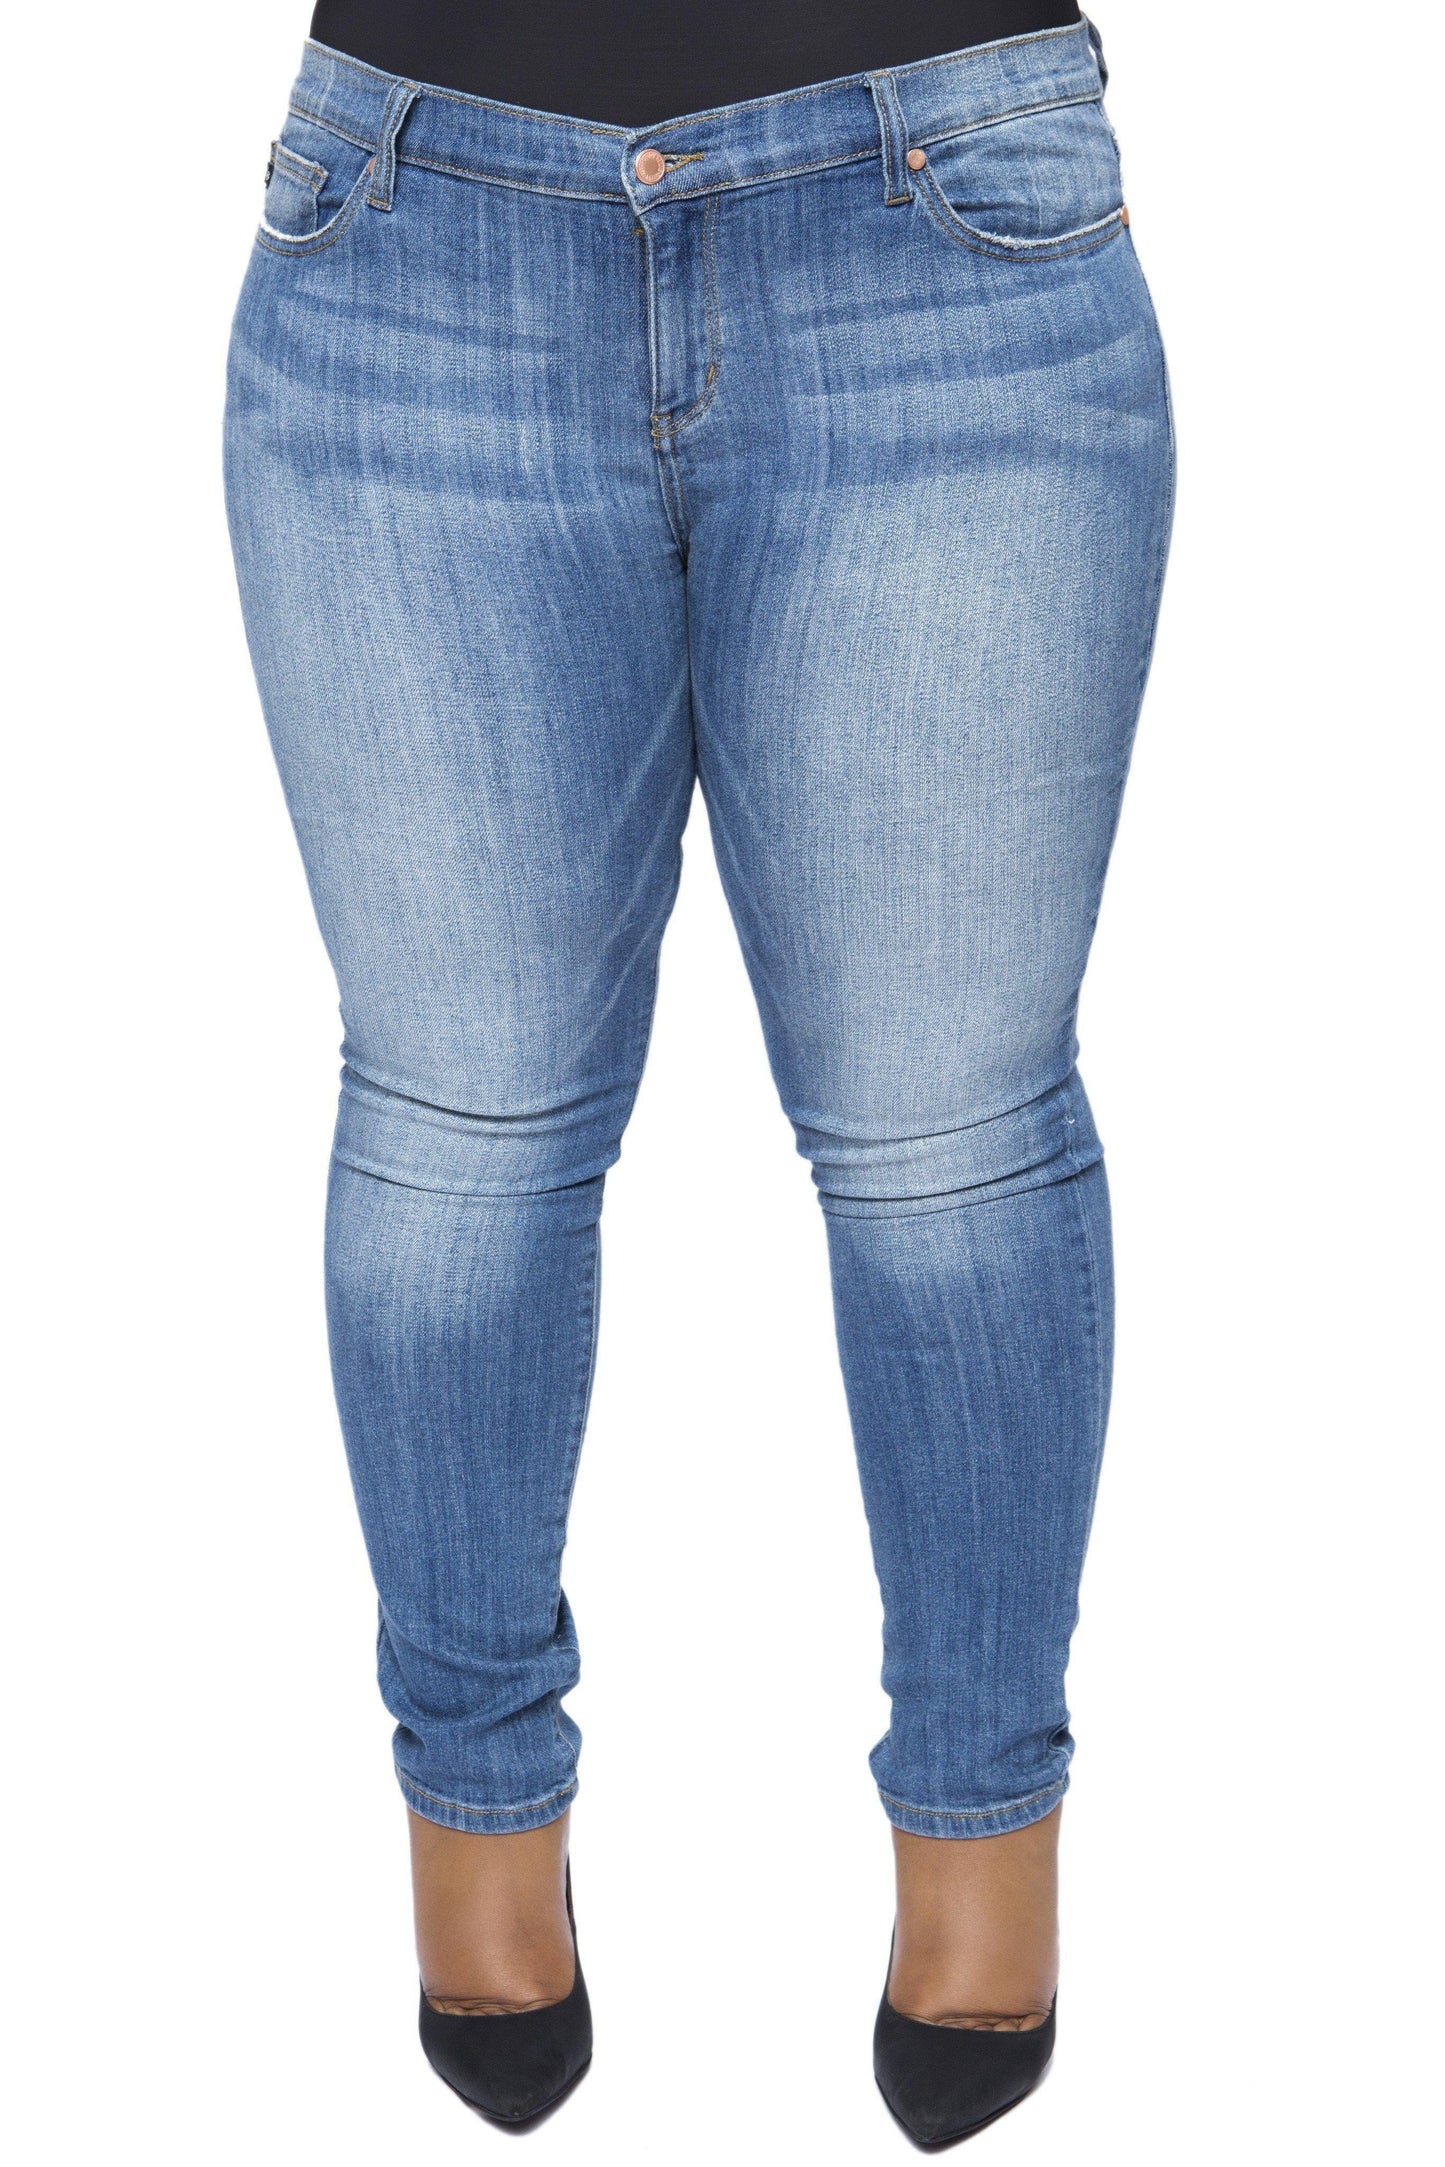 Plain Jane Denim Jeans (Medium Blue)-Denim-Boughie-Boughie